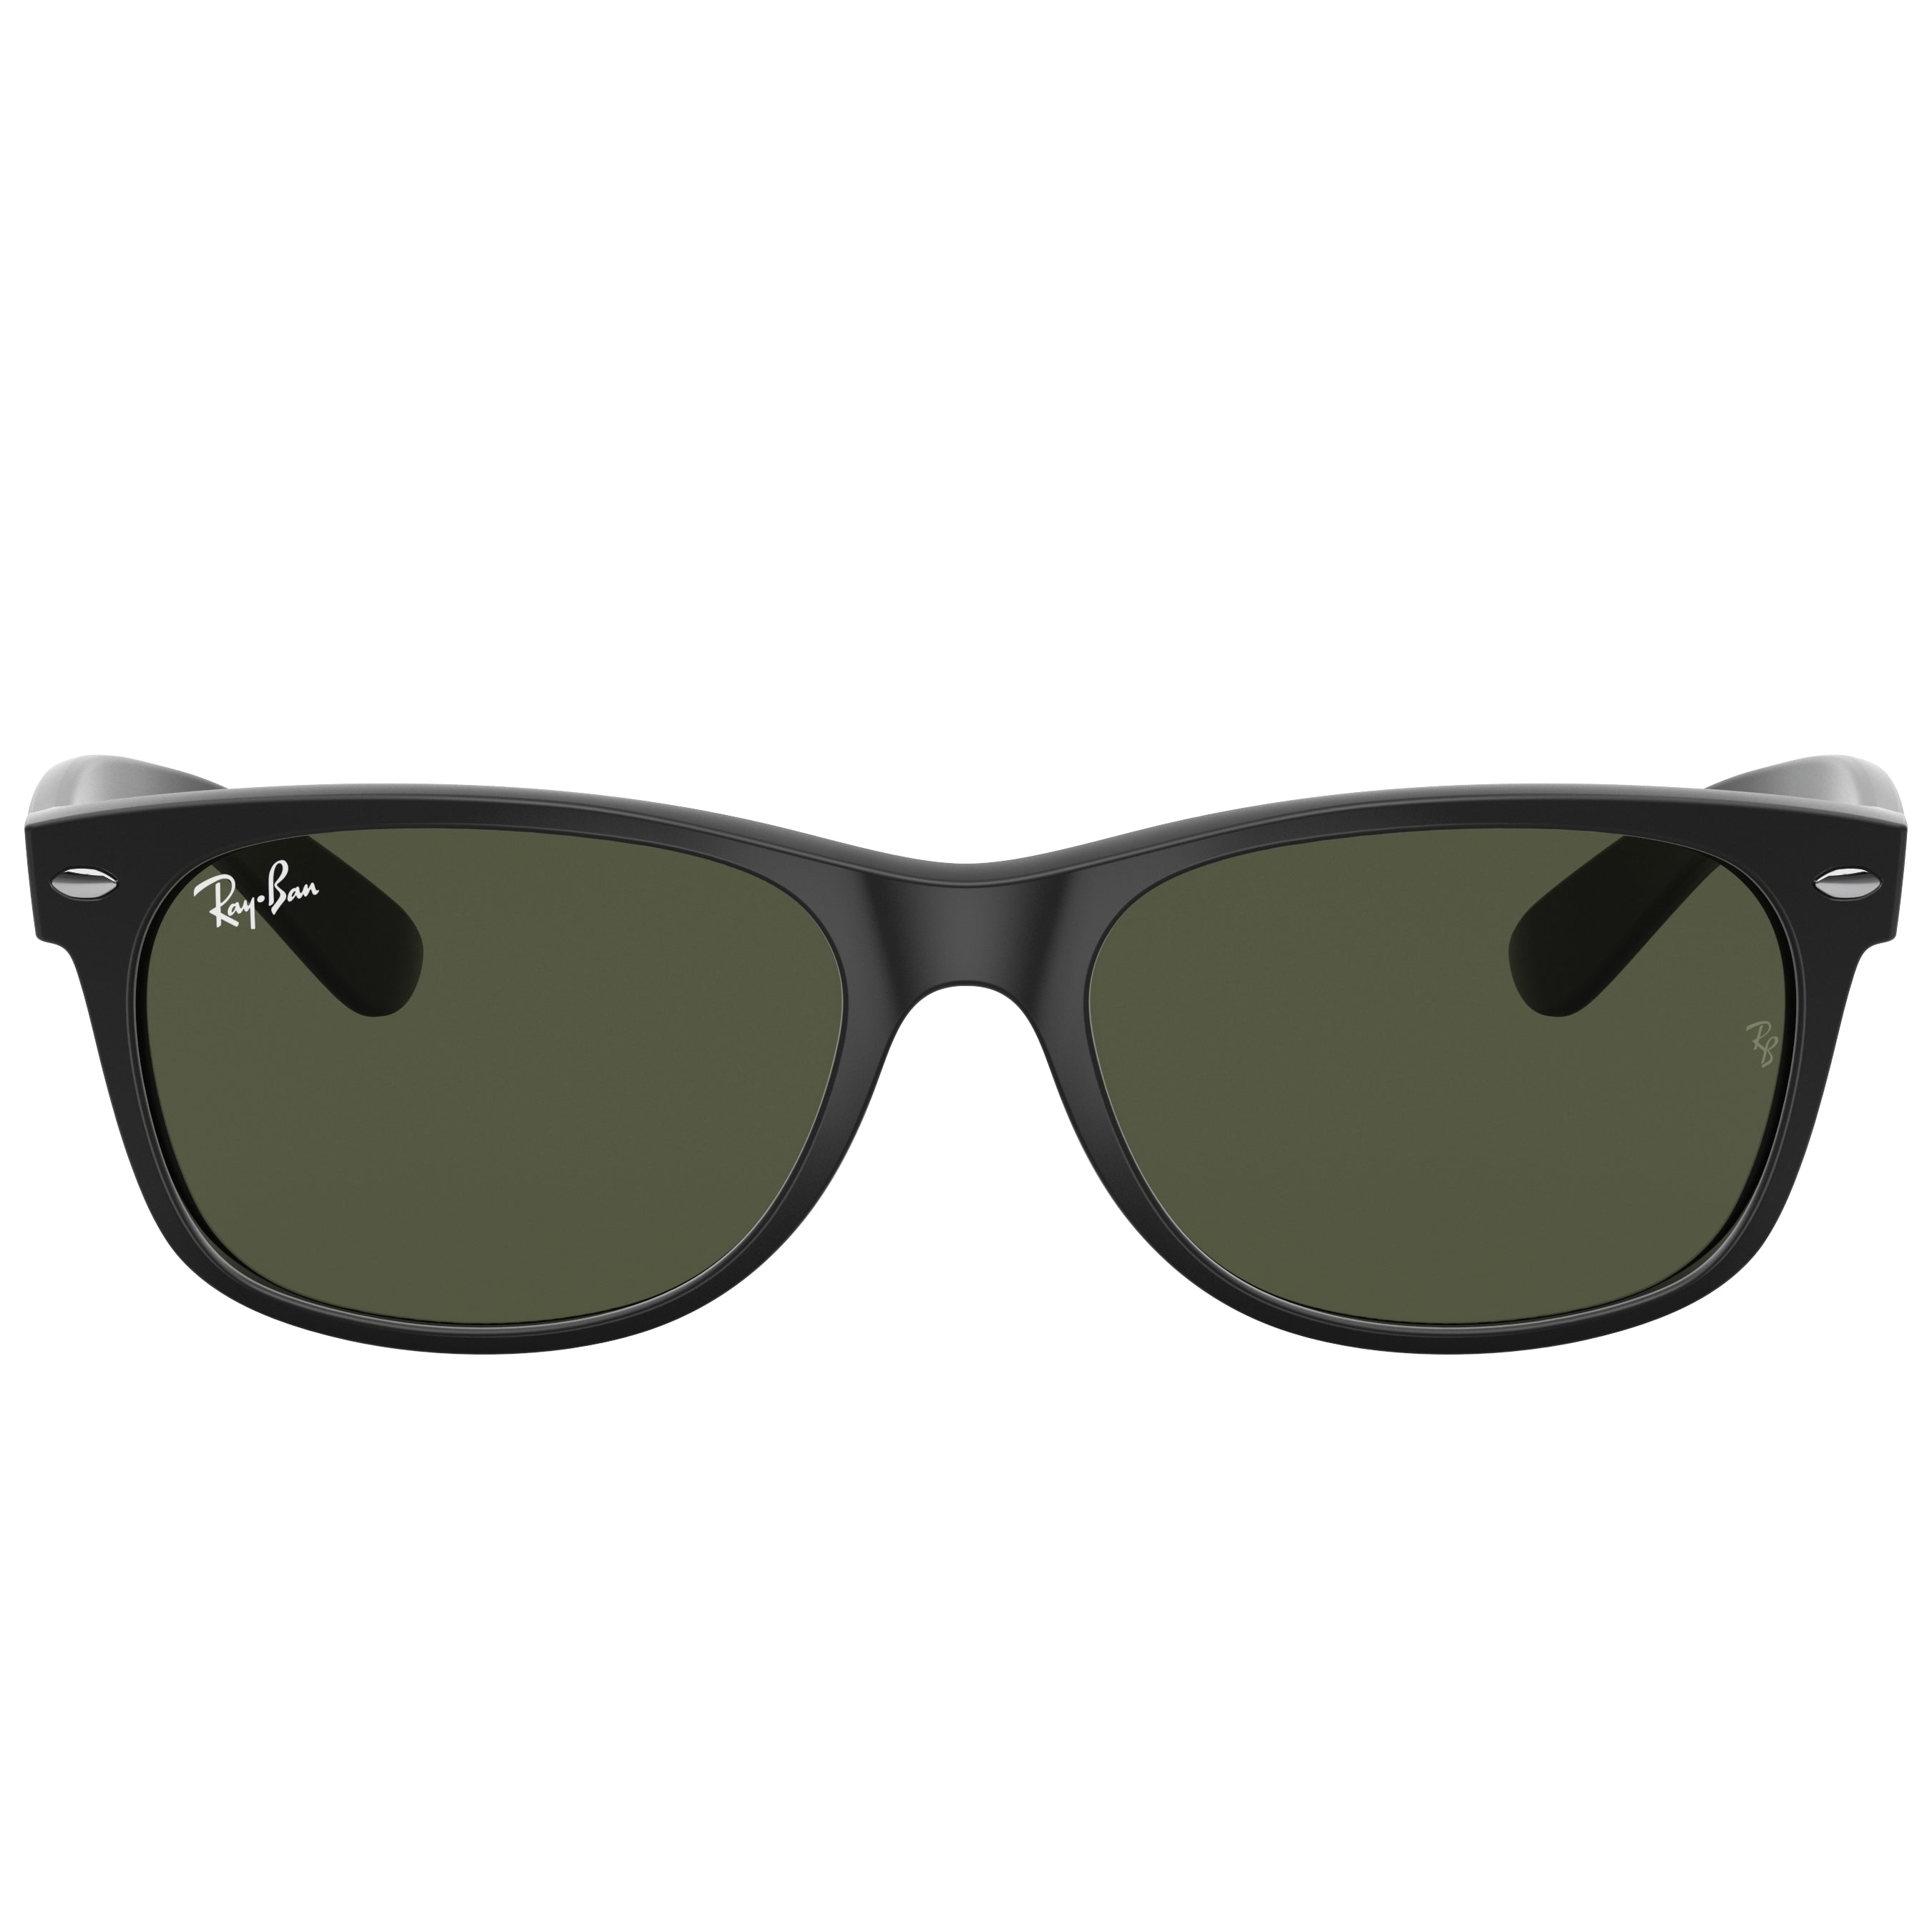 Ray-Ban New Wayfarer Wayfarer Men's Sunglasses RB2132 622 52